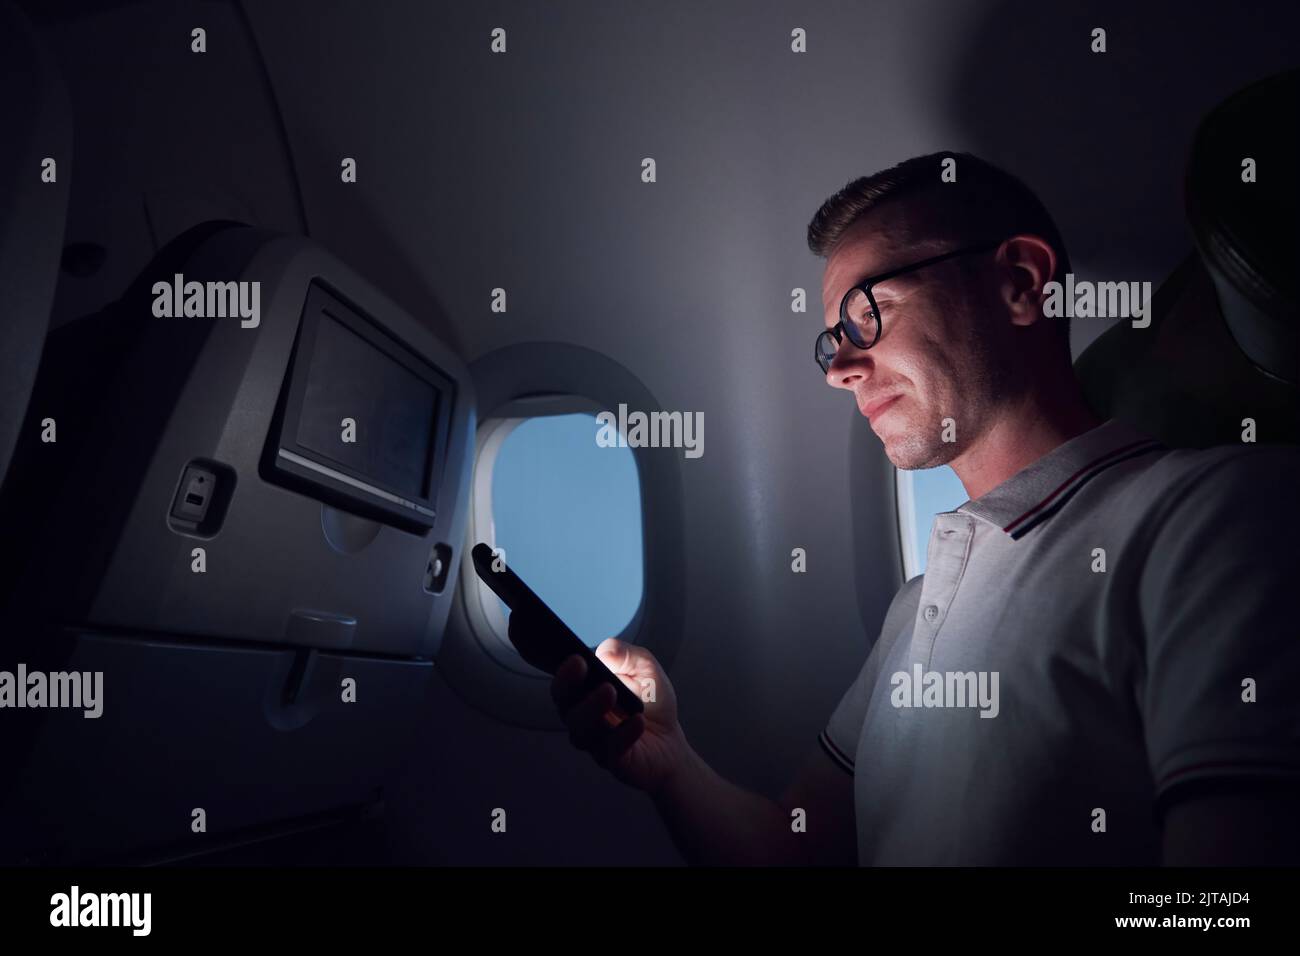 Man traveling by airplane. Passenger using phone during night flight. Stock Photo